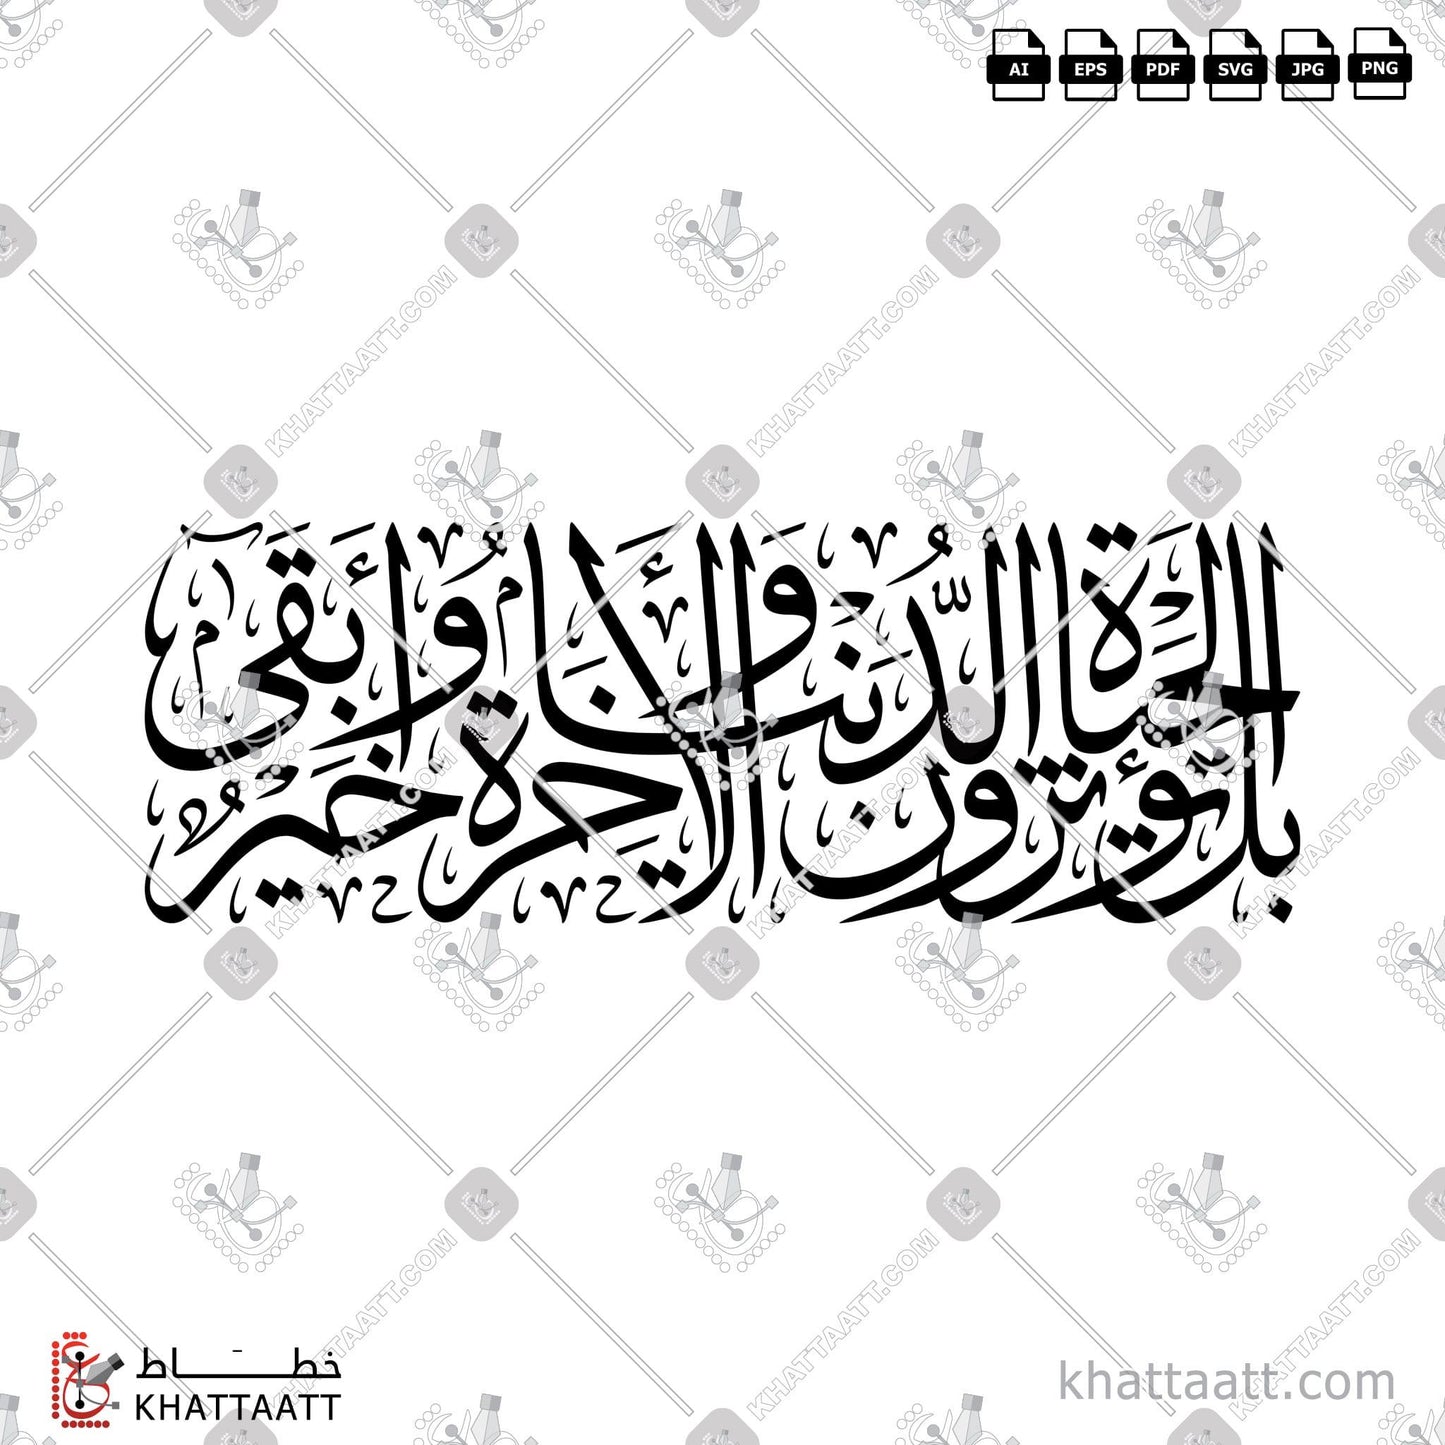 Download Arabic Calligraphy of بل تؤثرون الحياة الدنيا والآخرة خير وأبقى in Thuluth - خط الثلث in vector and .png